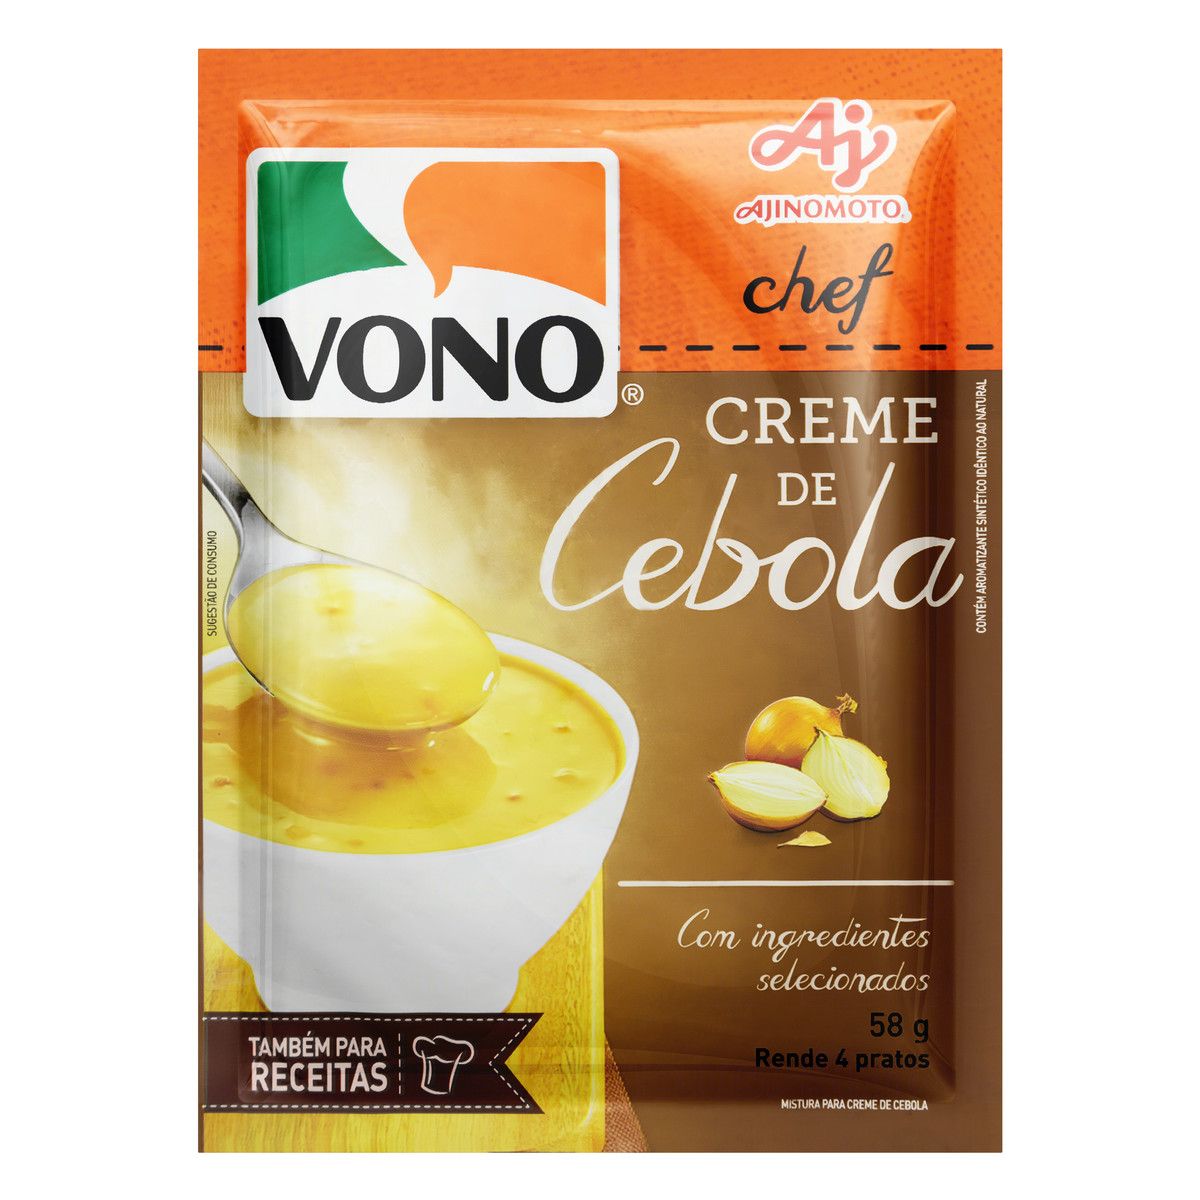 Creme Cebola Vono Chef Pacote 58g